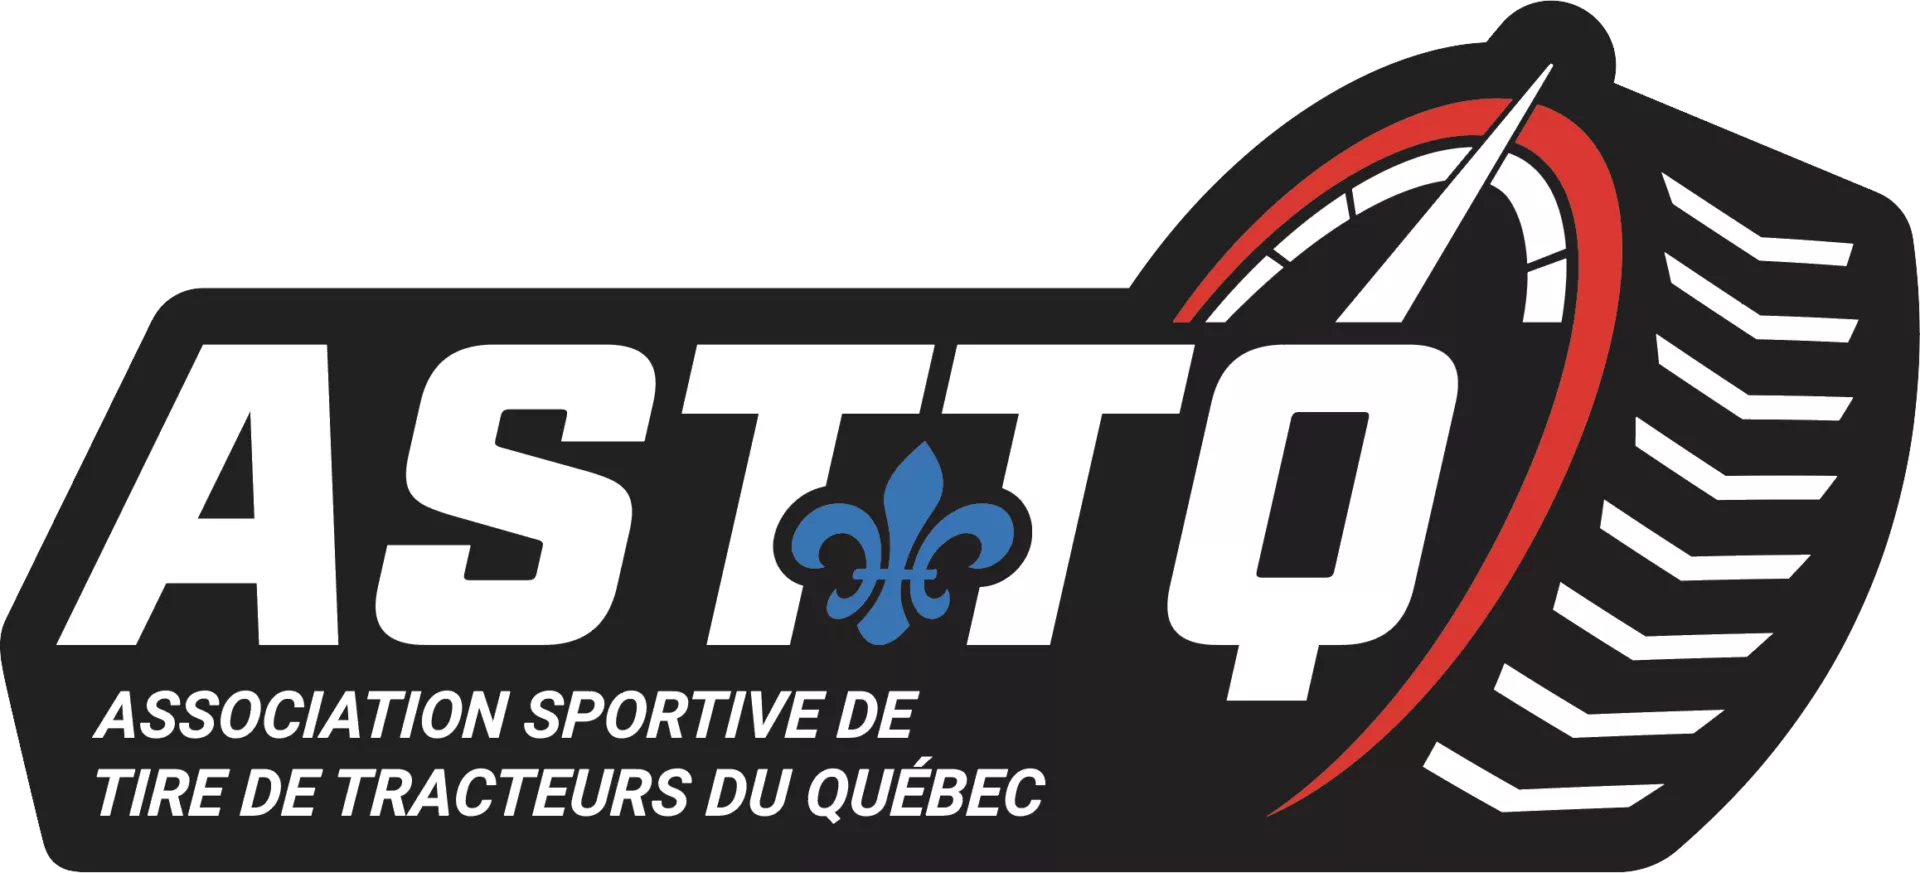 Association Sportive de Tire de Tracteurs du Québec